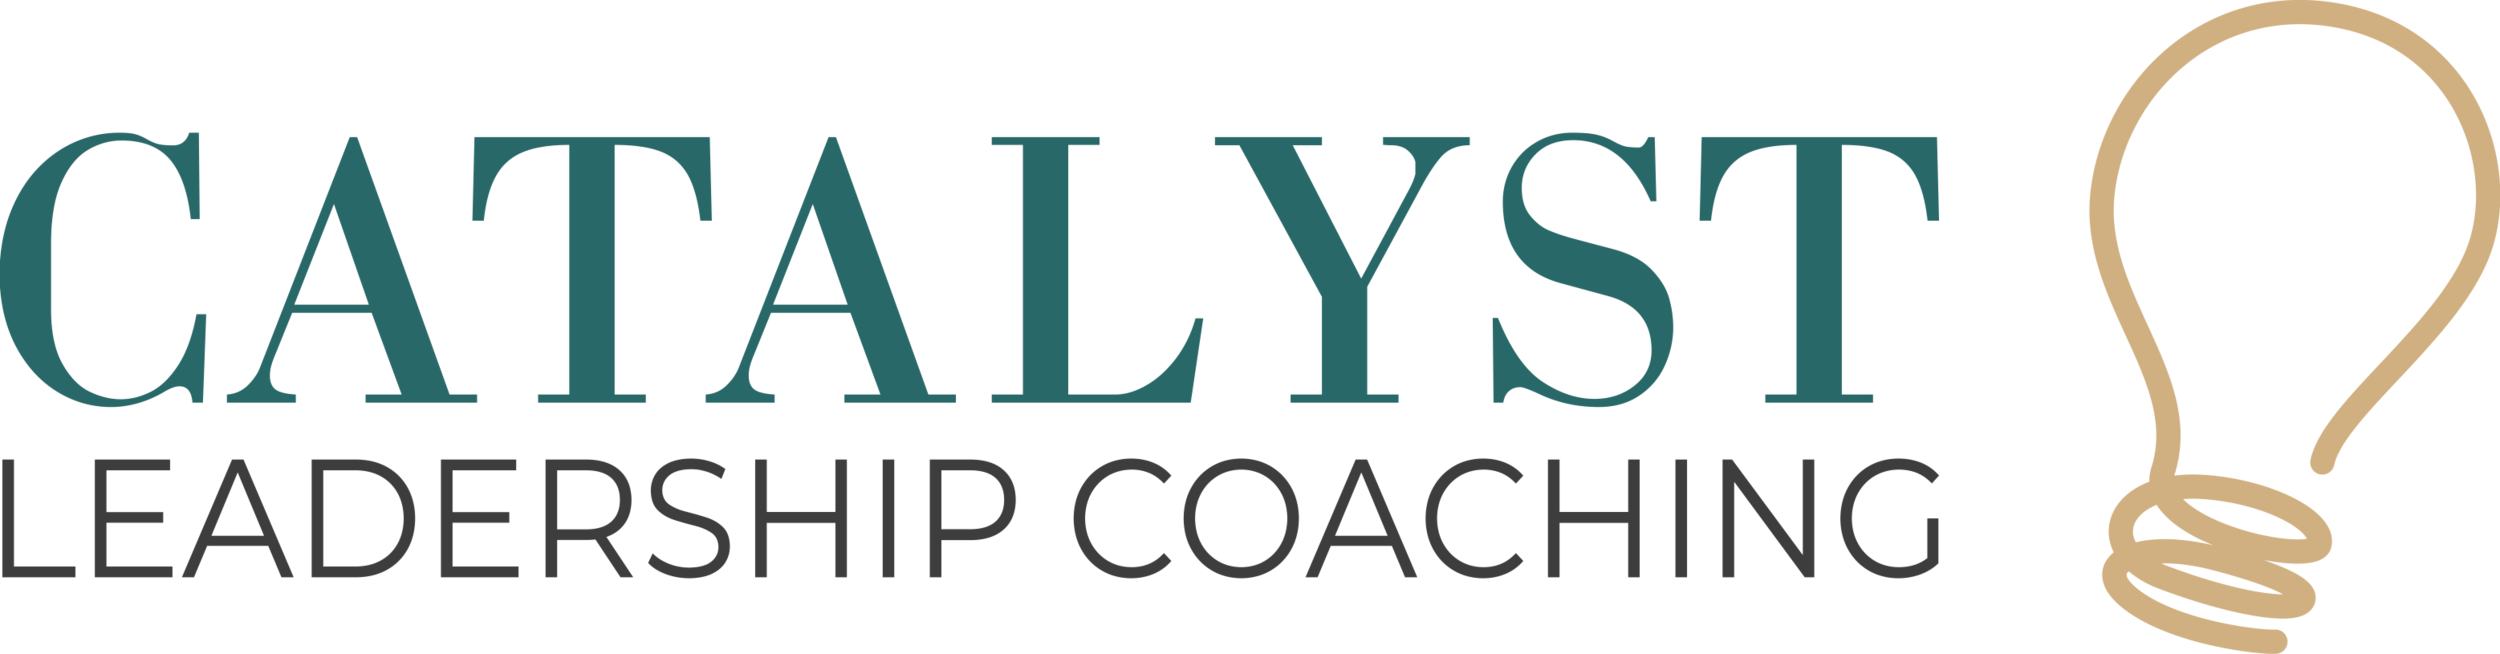 Catalyst Leadership Coaching